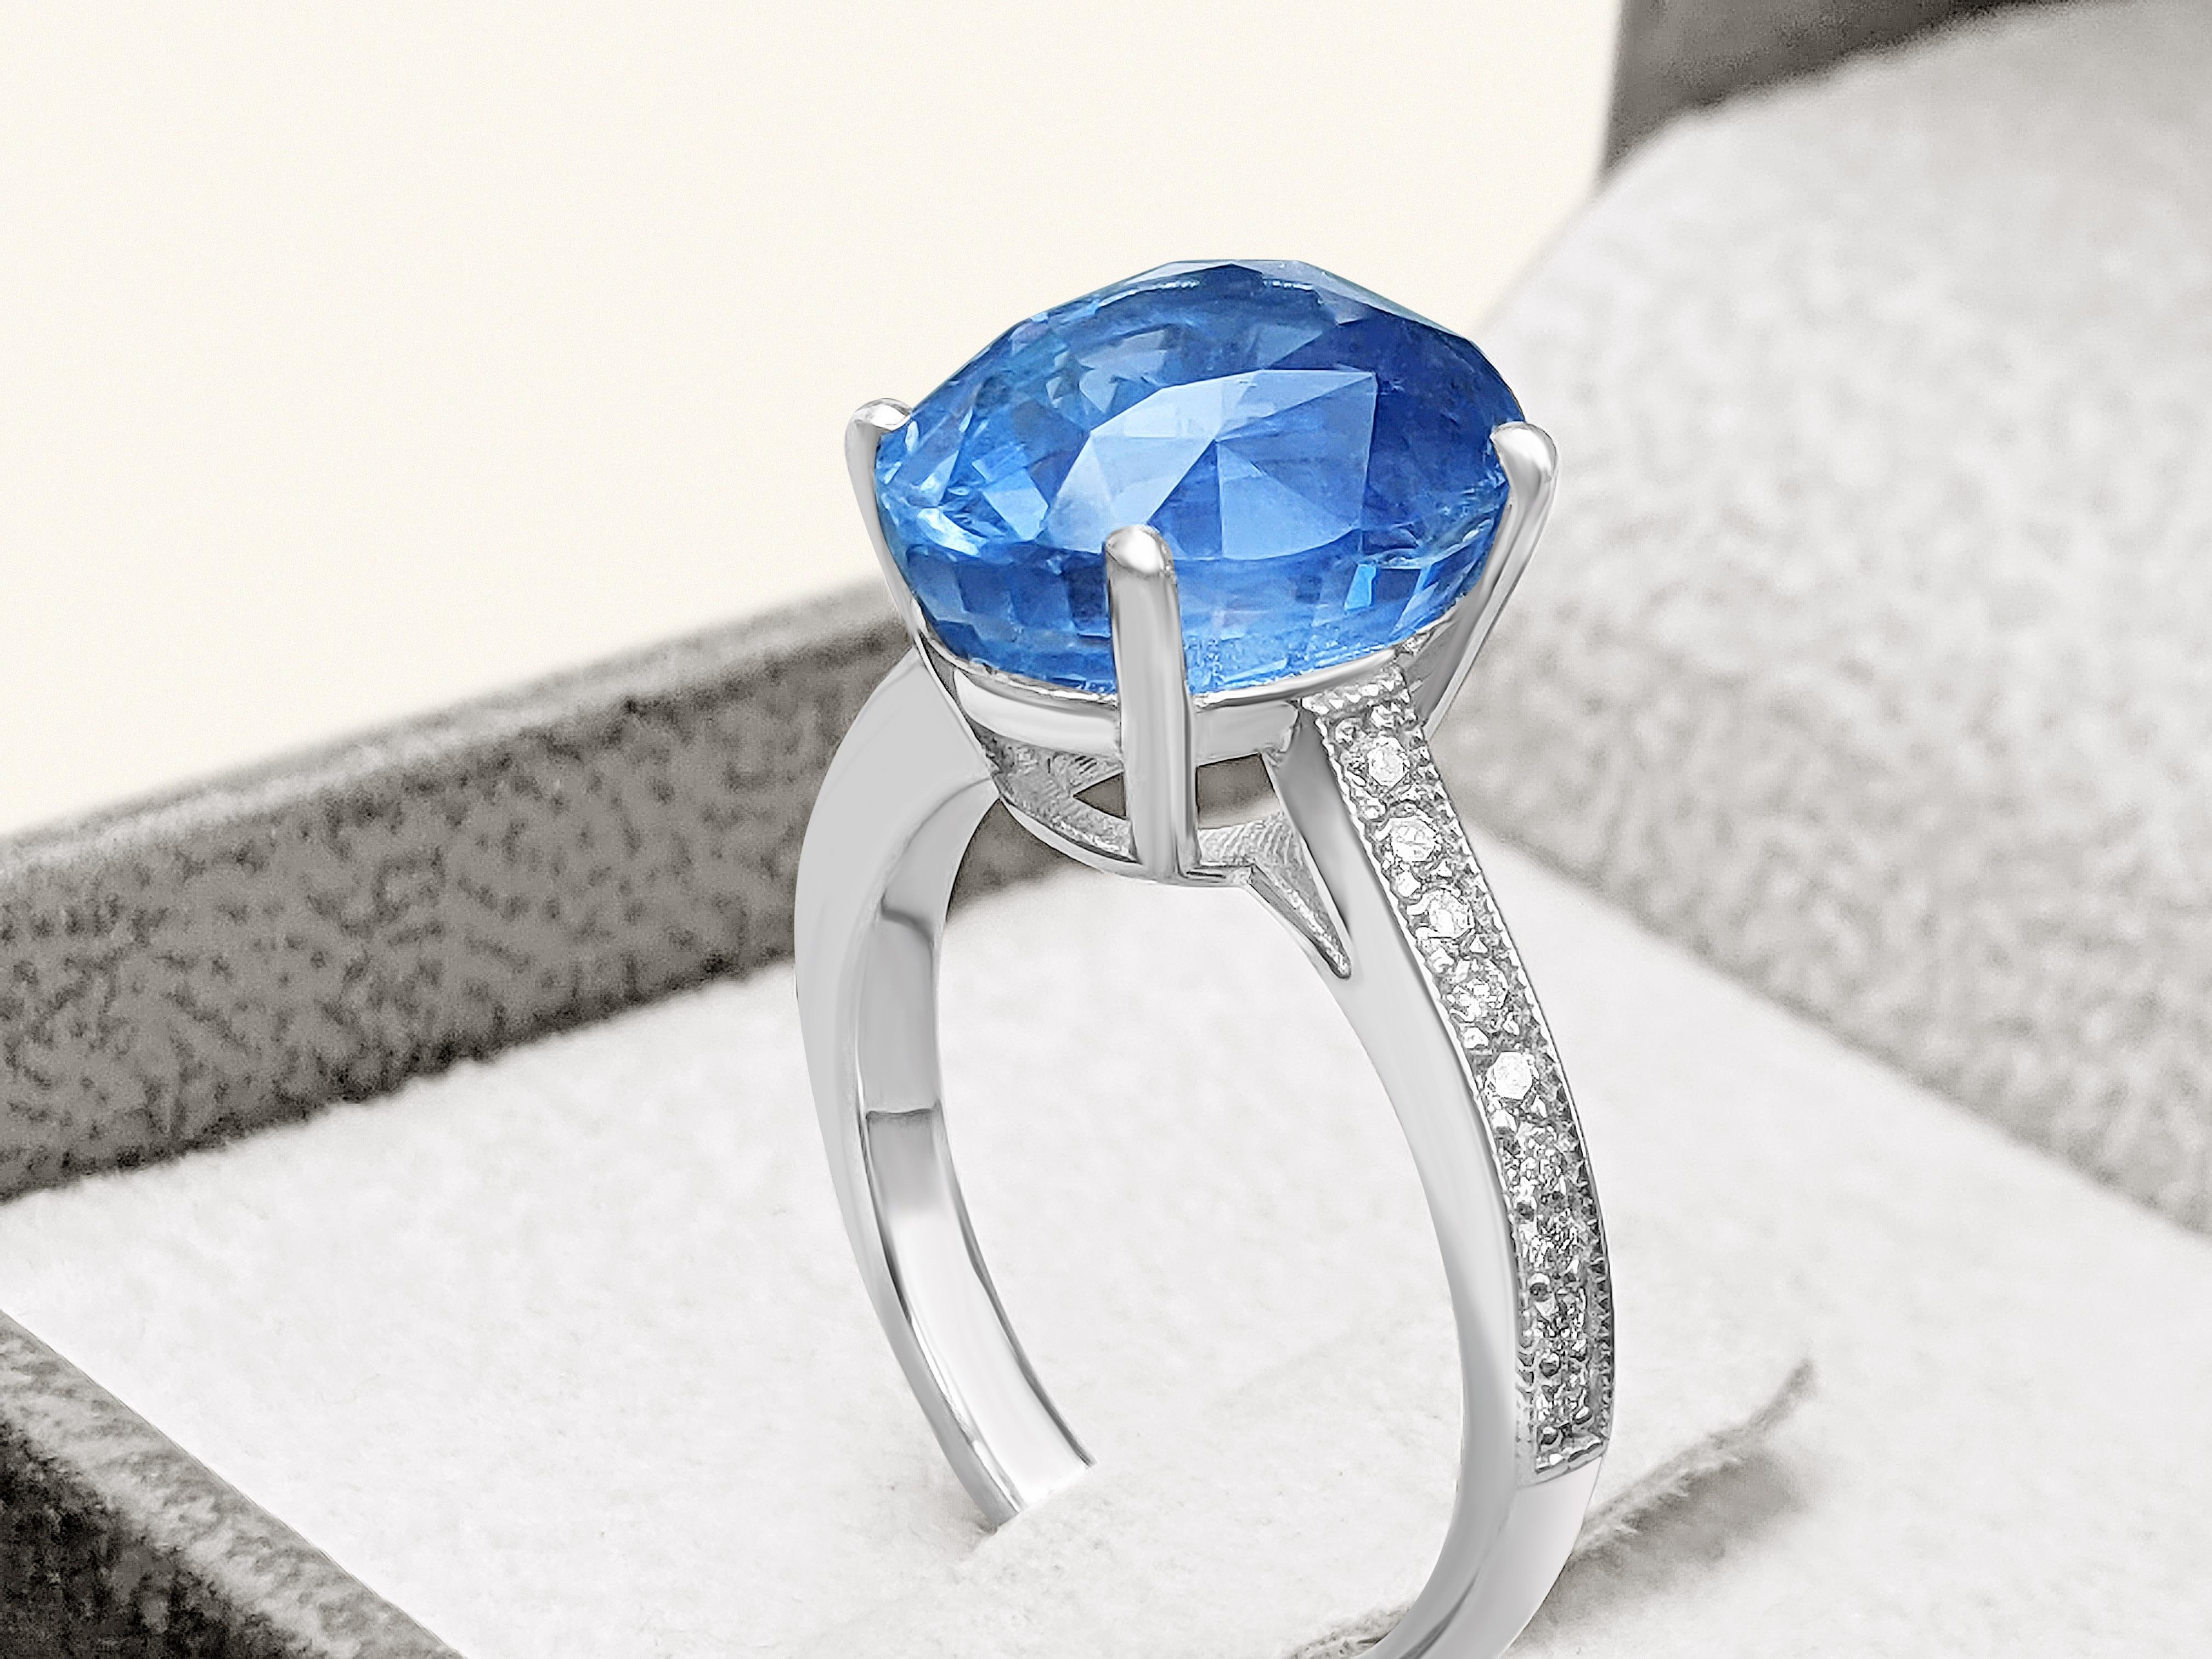 Oval Cut 9.35 Carat Blue Sapphire and Diamonds Ring